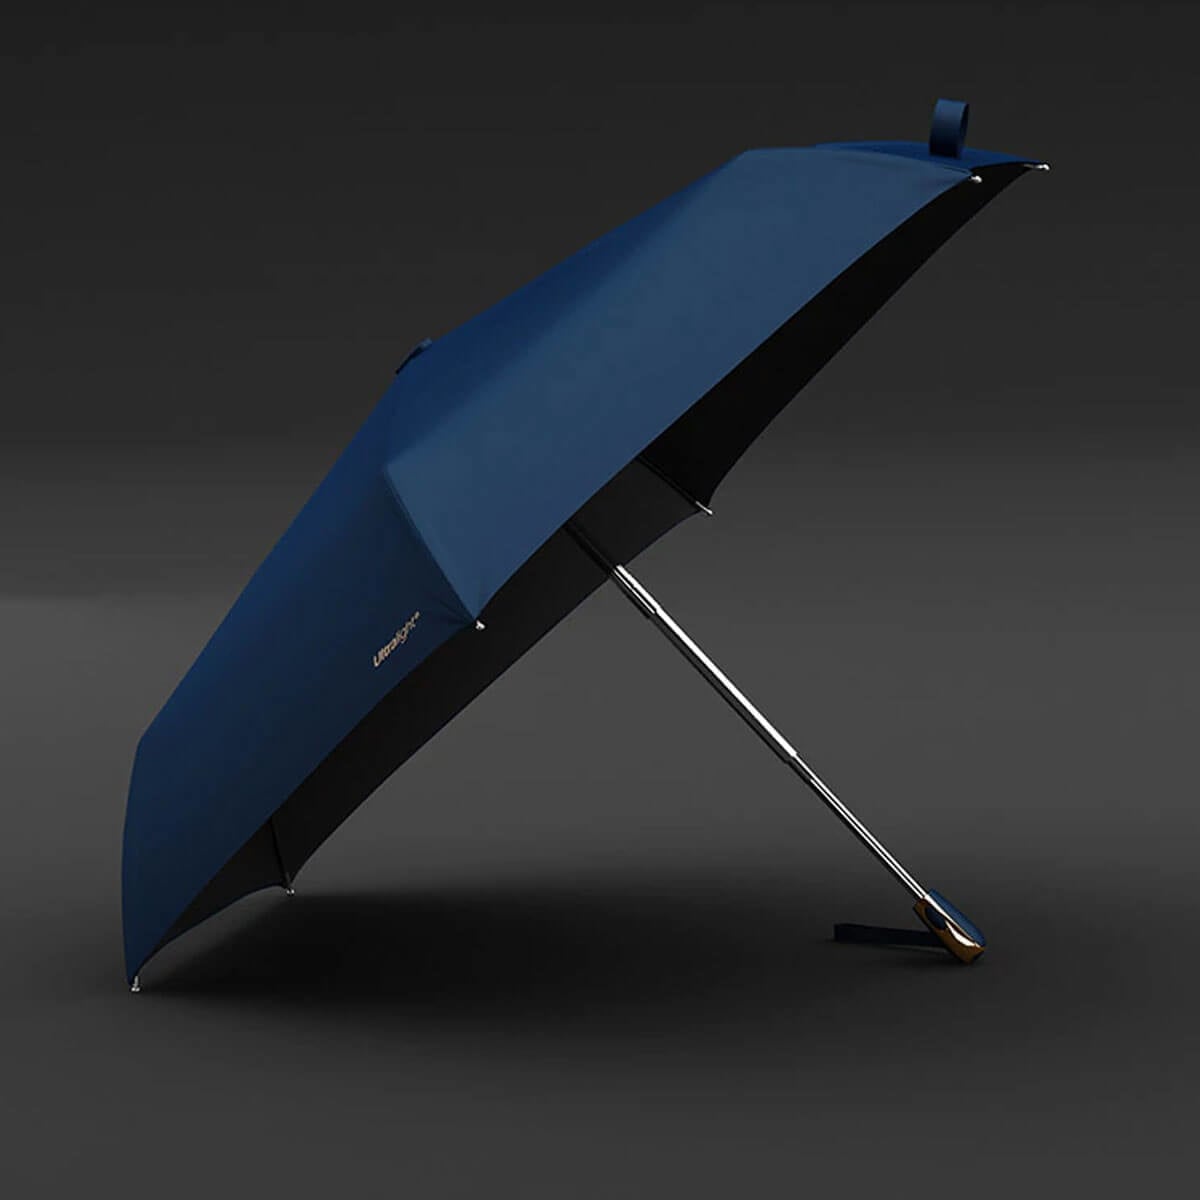 Flat Automatic Ultralight Classy Umbrella